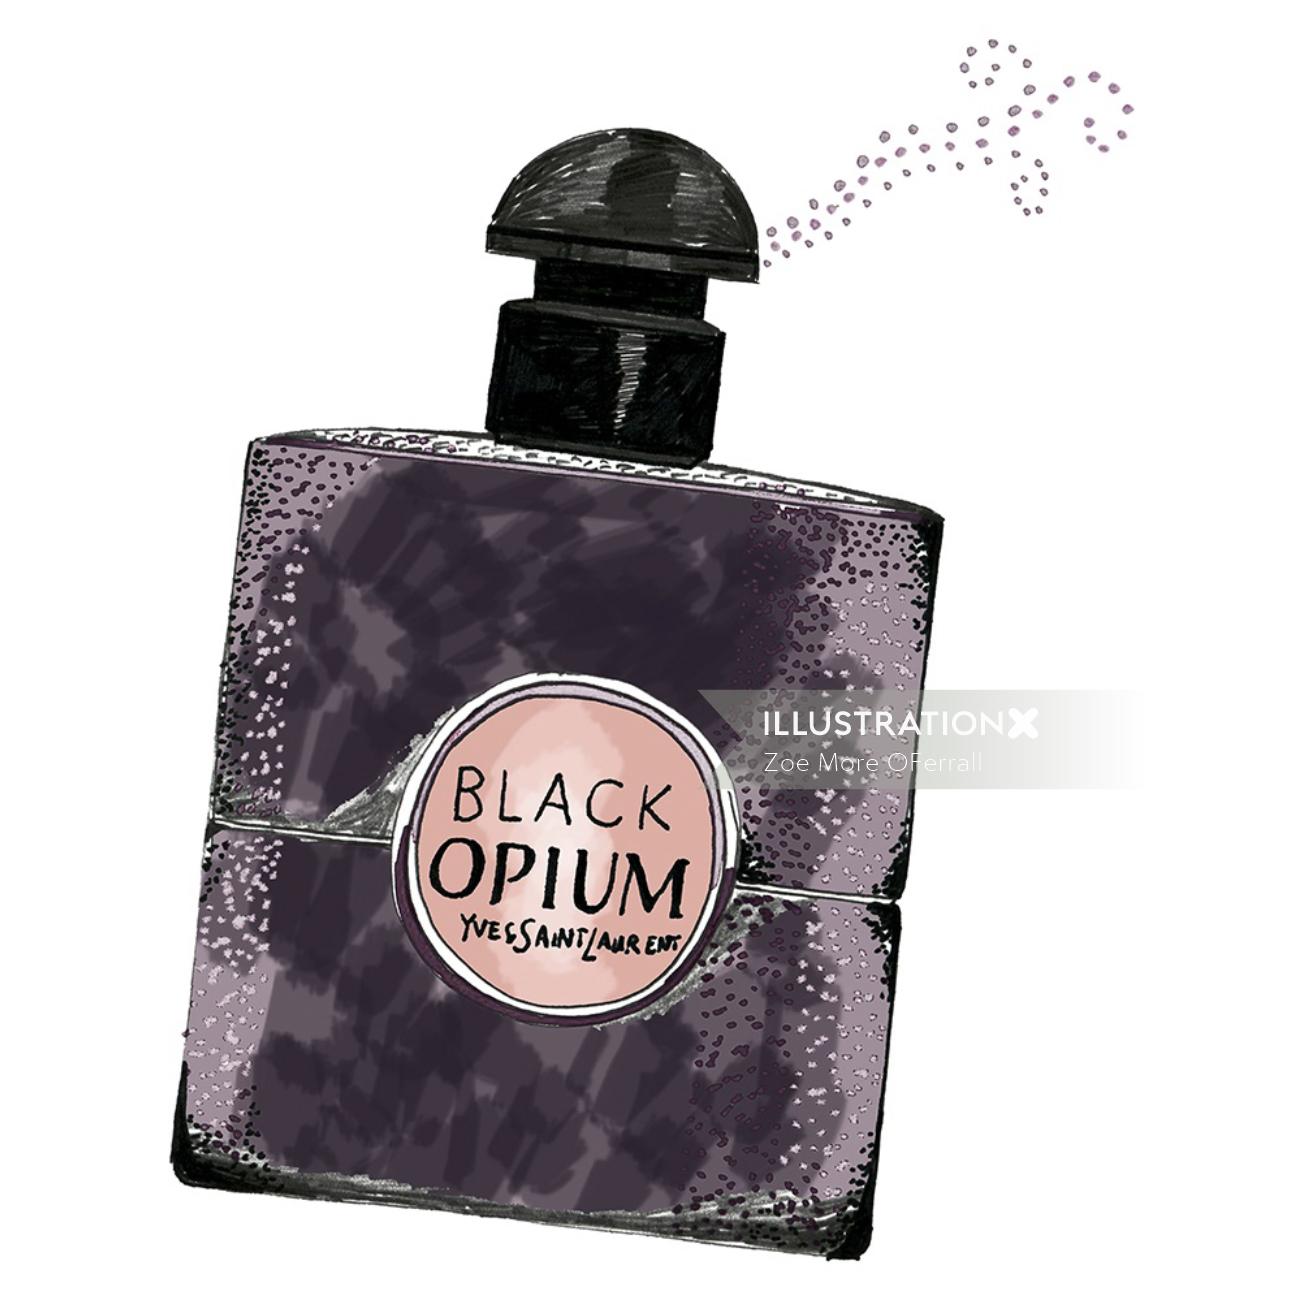 Black Opium perfume beauty illustration